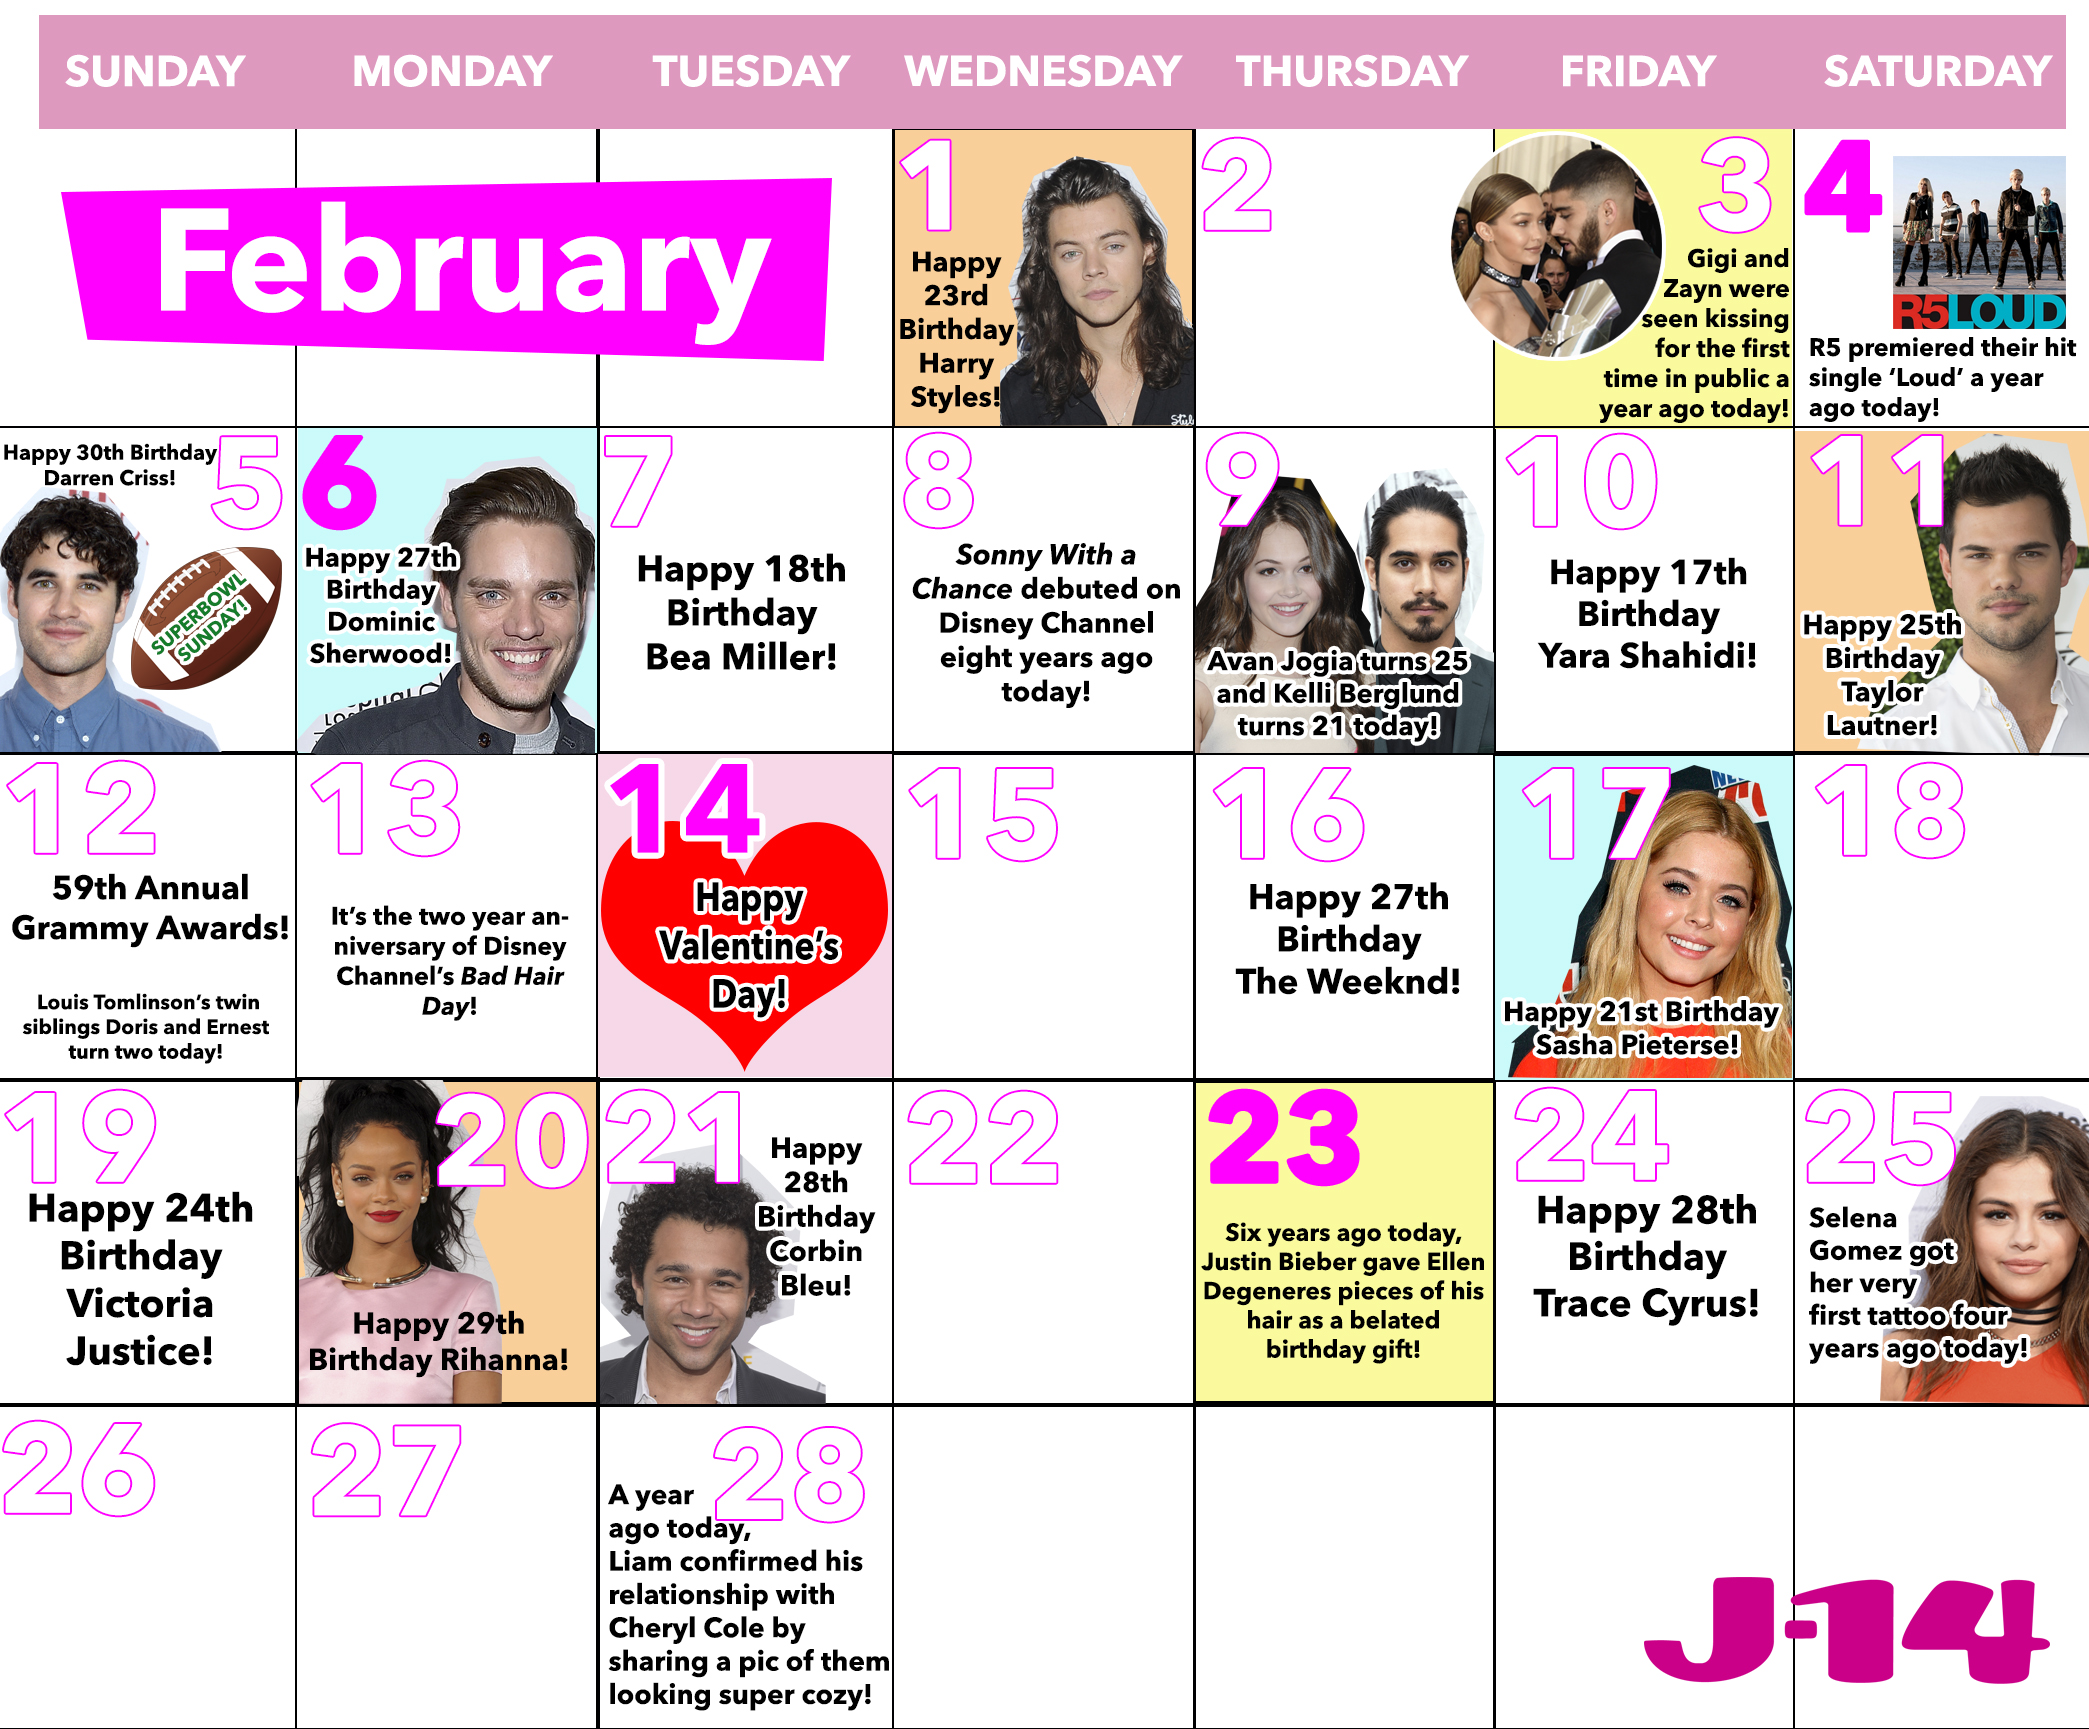 Get Your 2017 February Printable Calendar Today